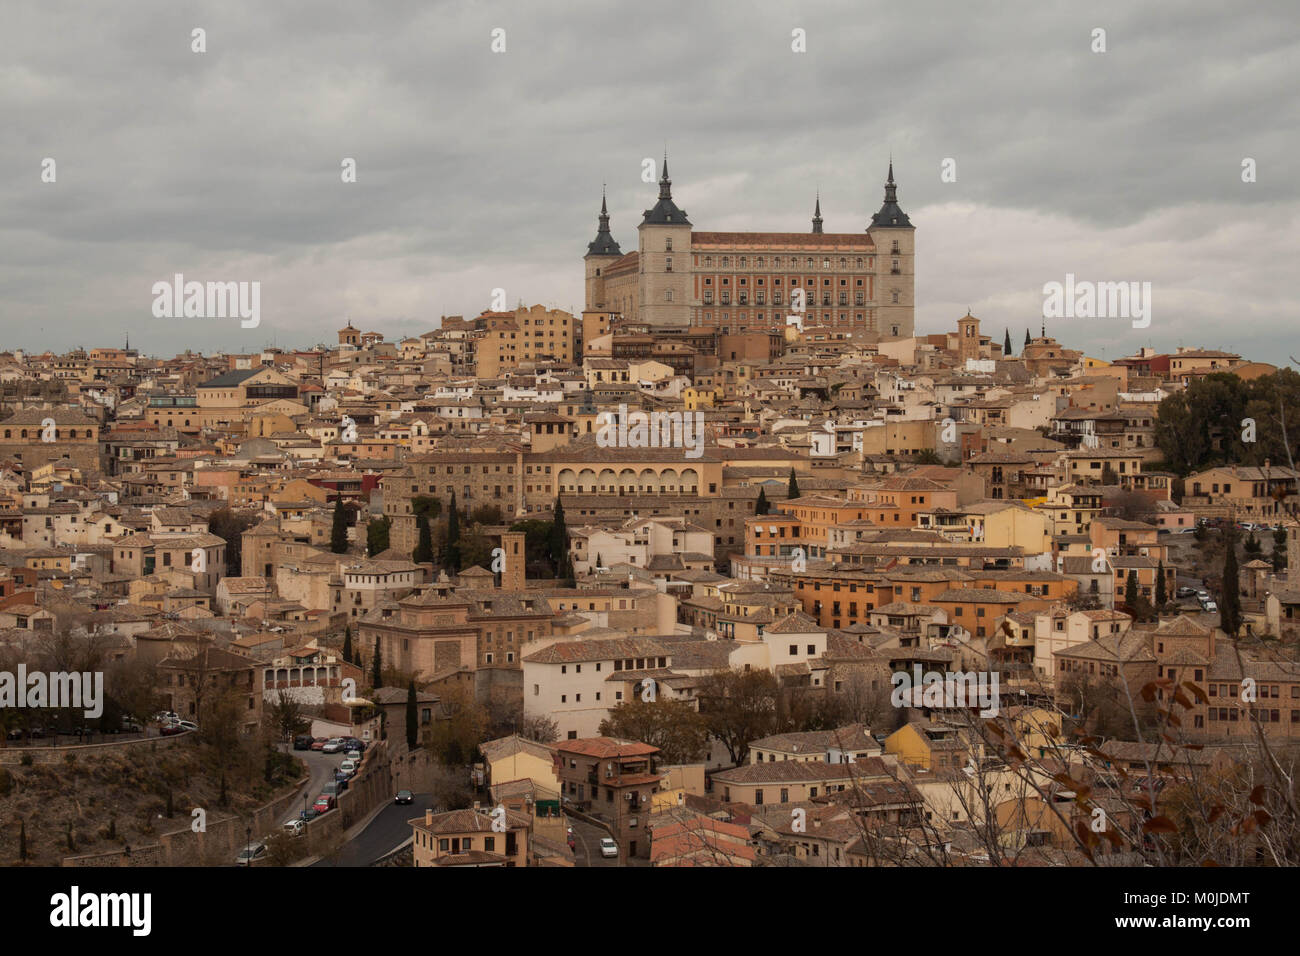 panoramic view of the city of Toledo, Spain Stock Photo